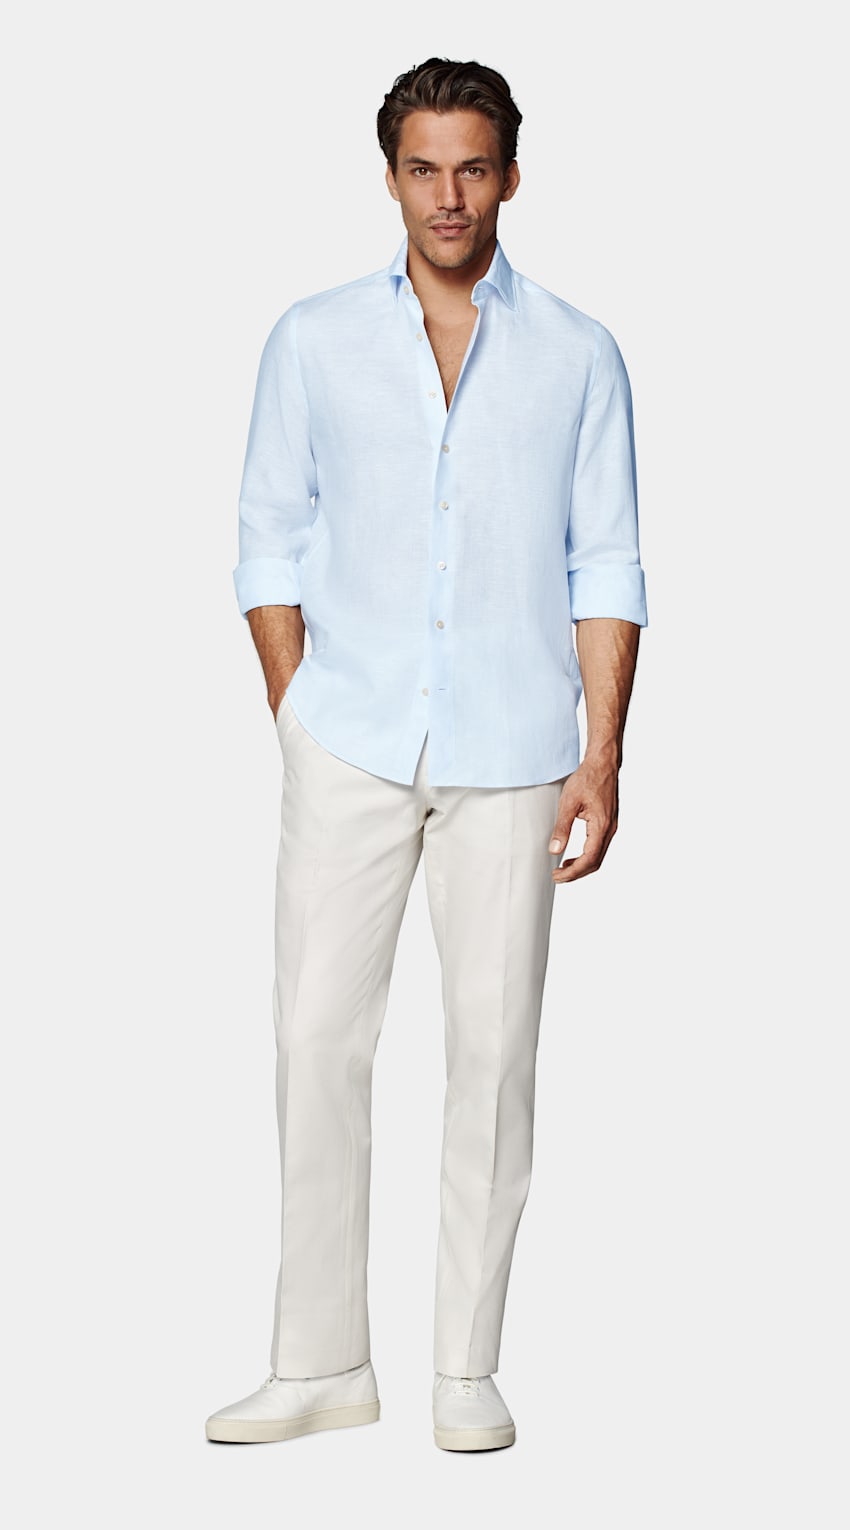 SUITSUPPLY Puro lino de Albini, Italia Camisa corte Slim azul claro